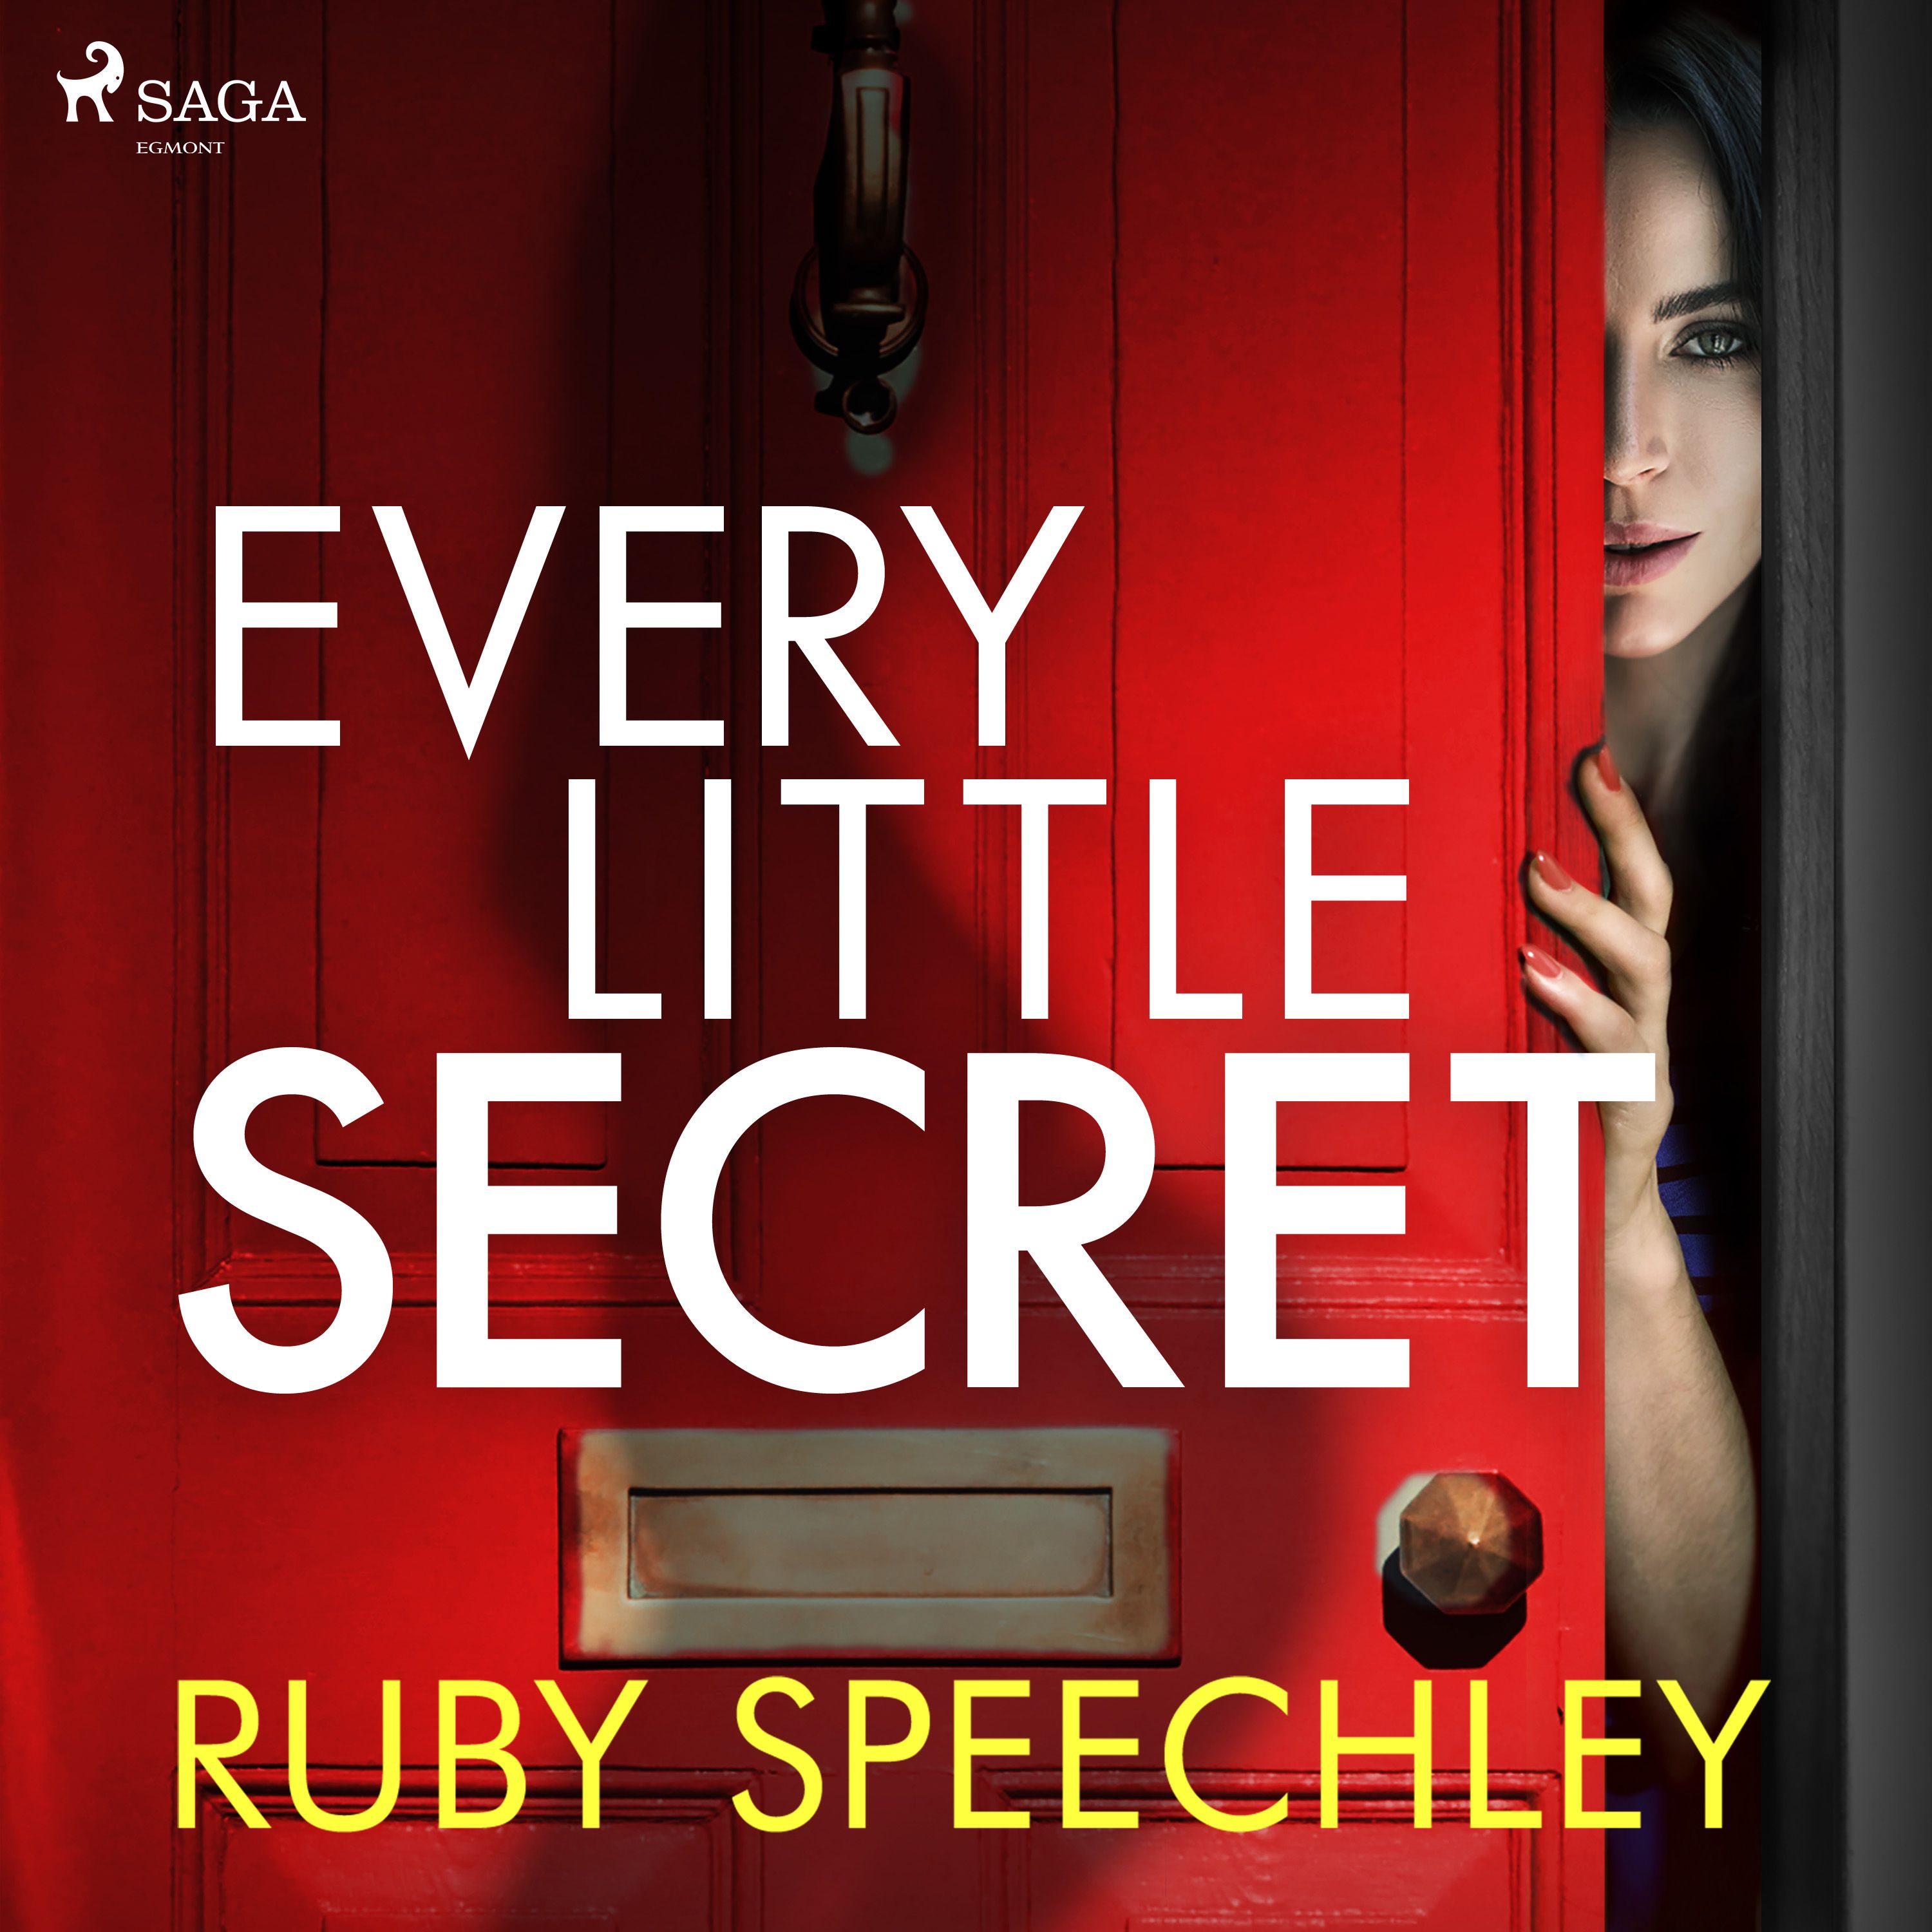 Every Little Secret, ljudbok av Ruby Speechley